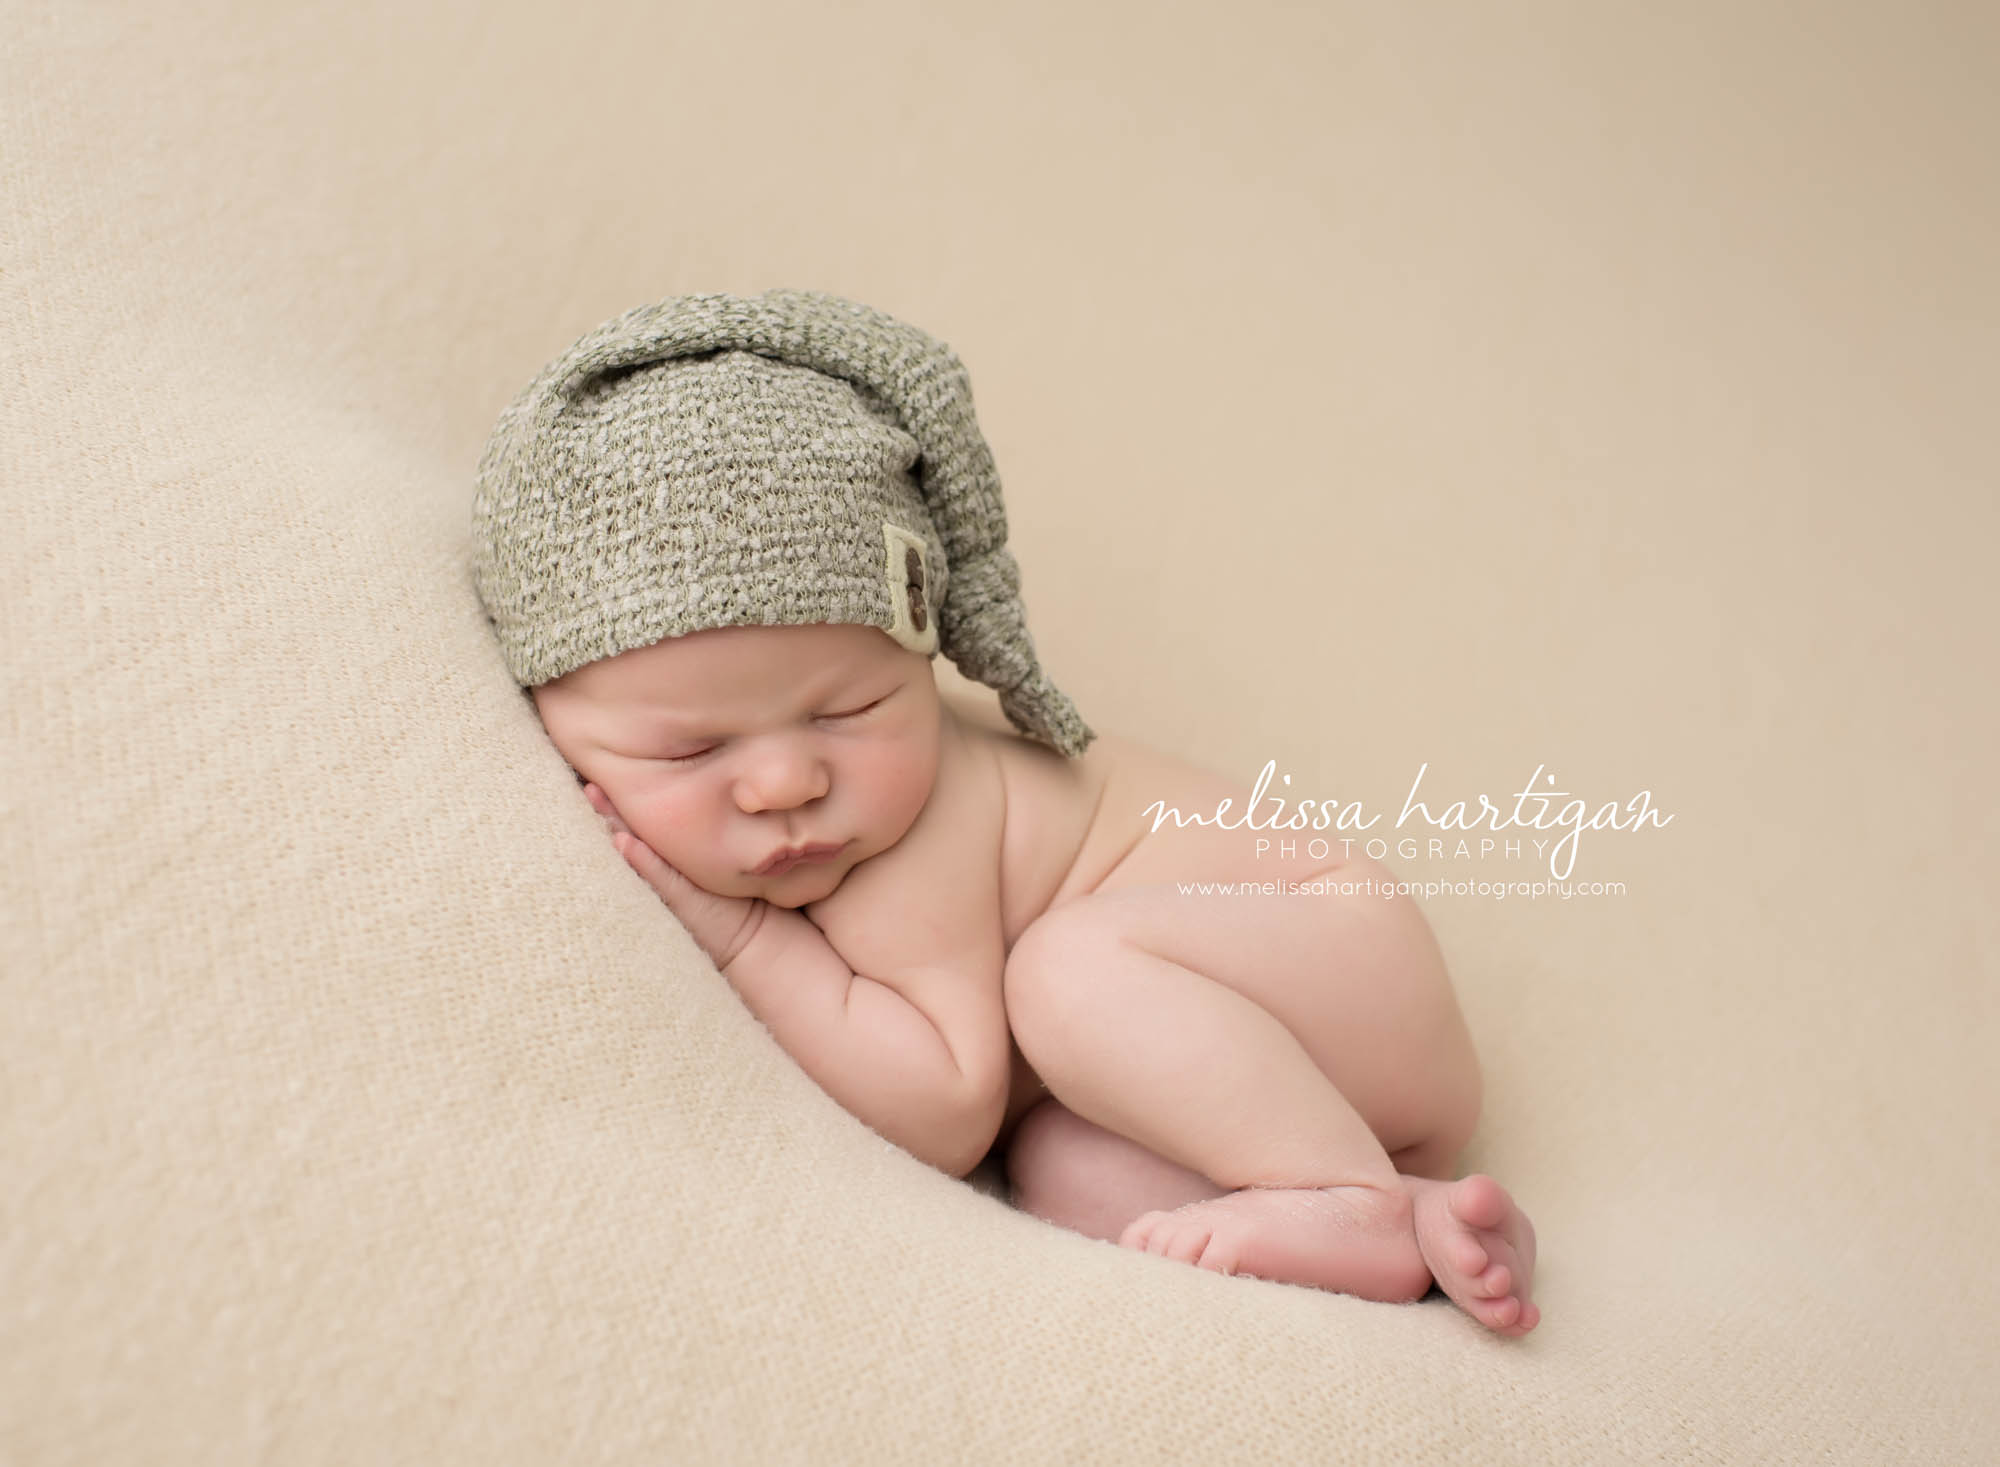 Newborn Session CT baby boy sleeping wearing gray knit hat